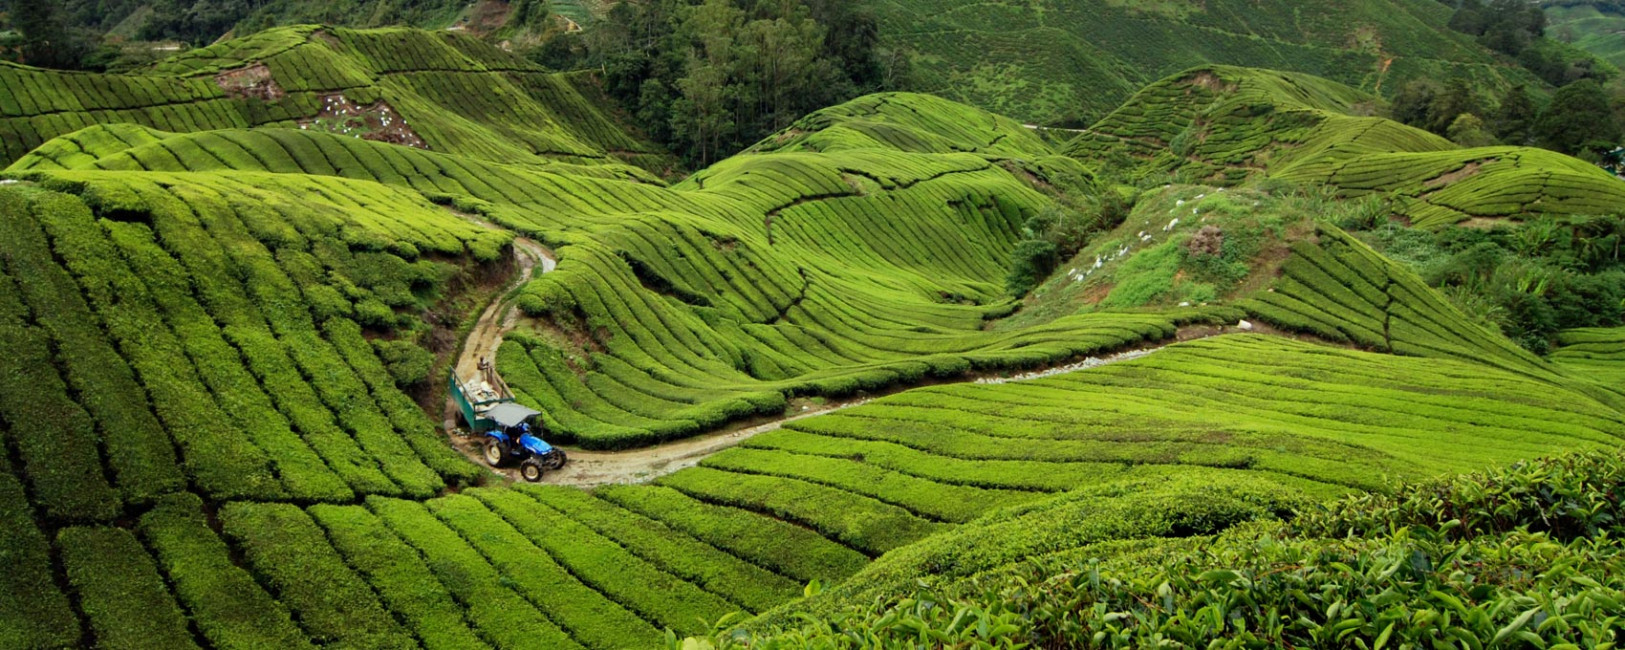 The BOH tea plantation in the Cameron Highlands of Malaysia